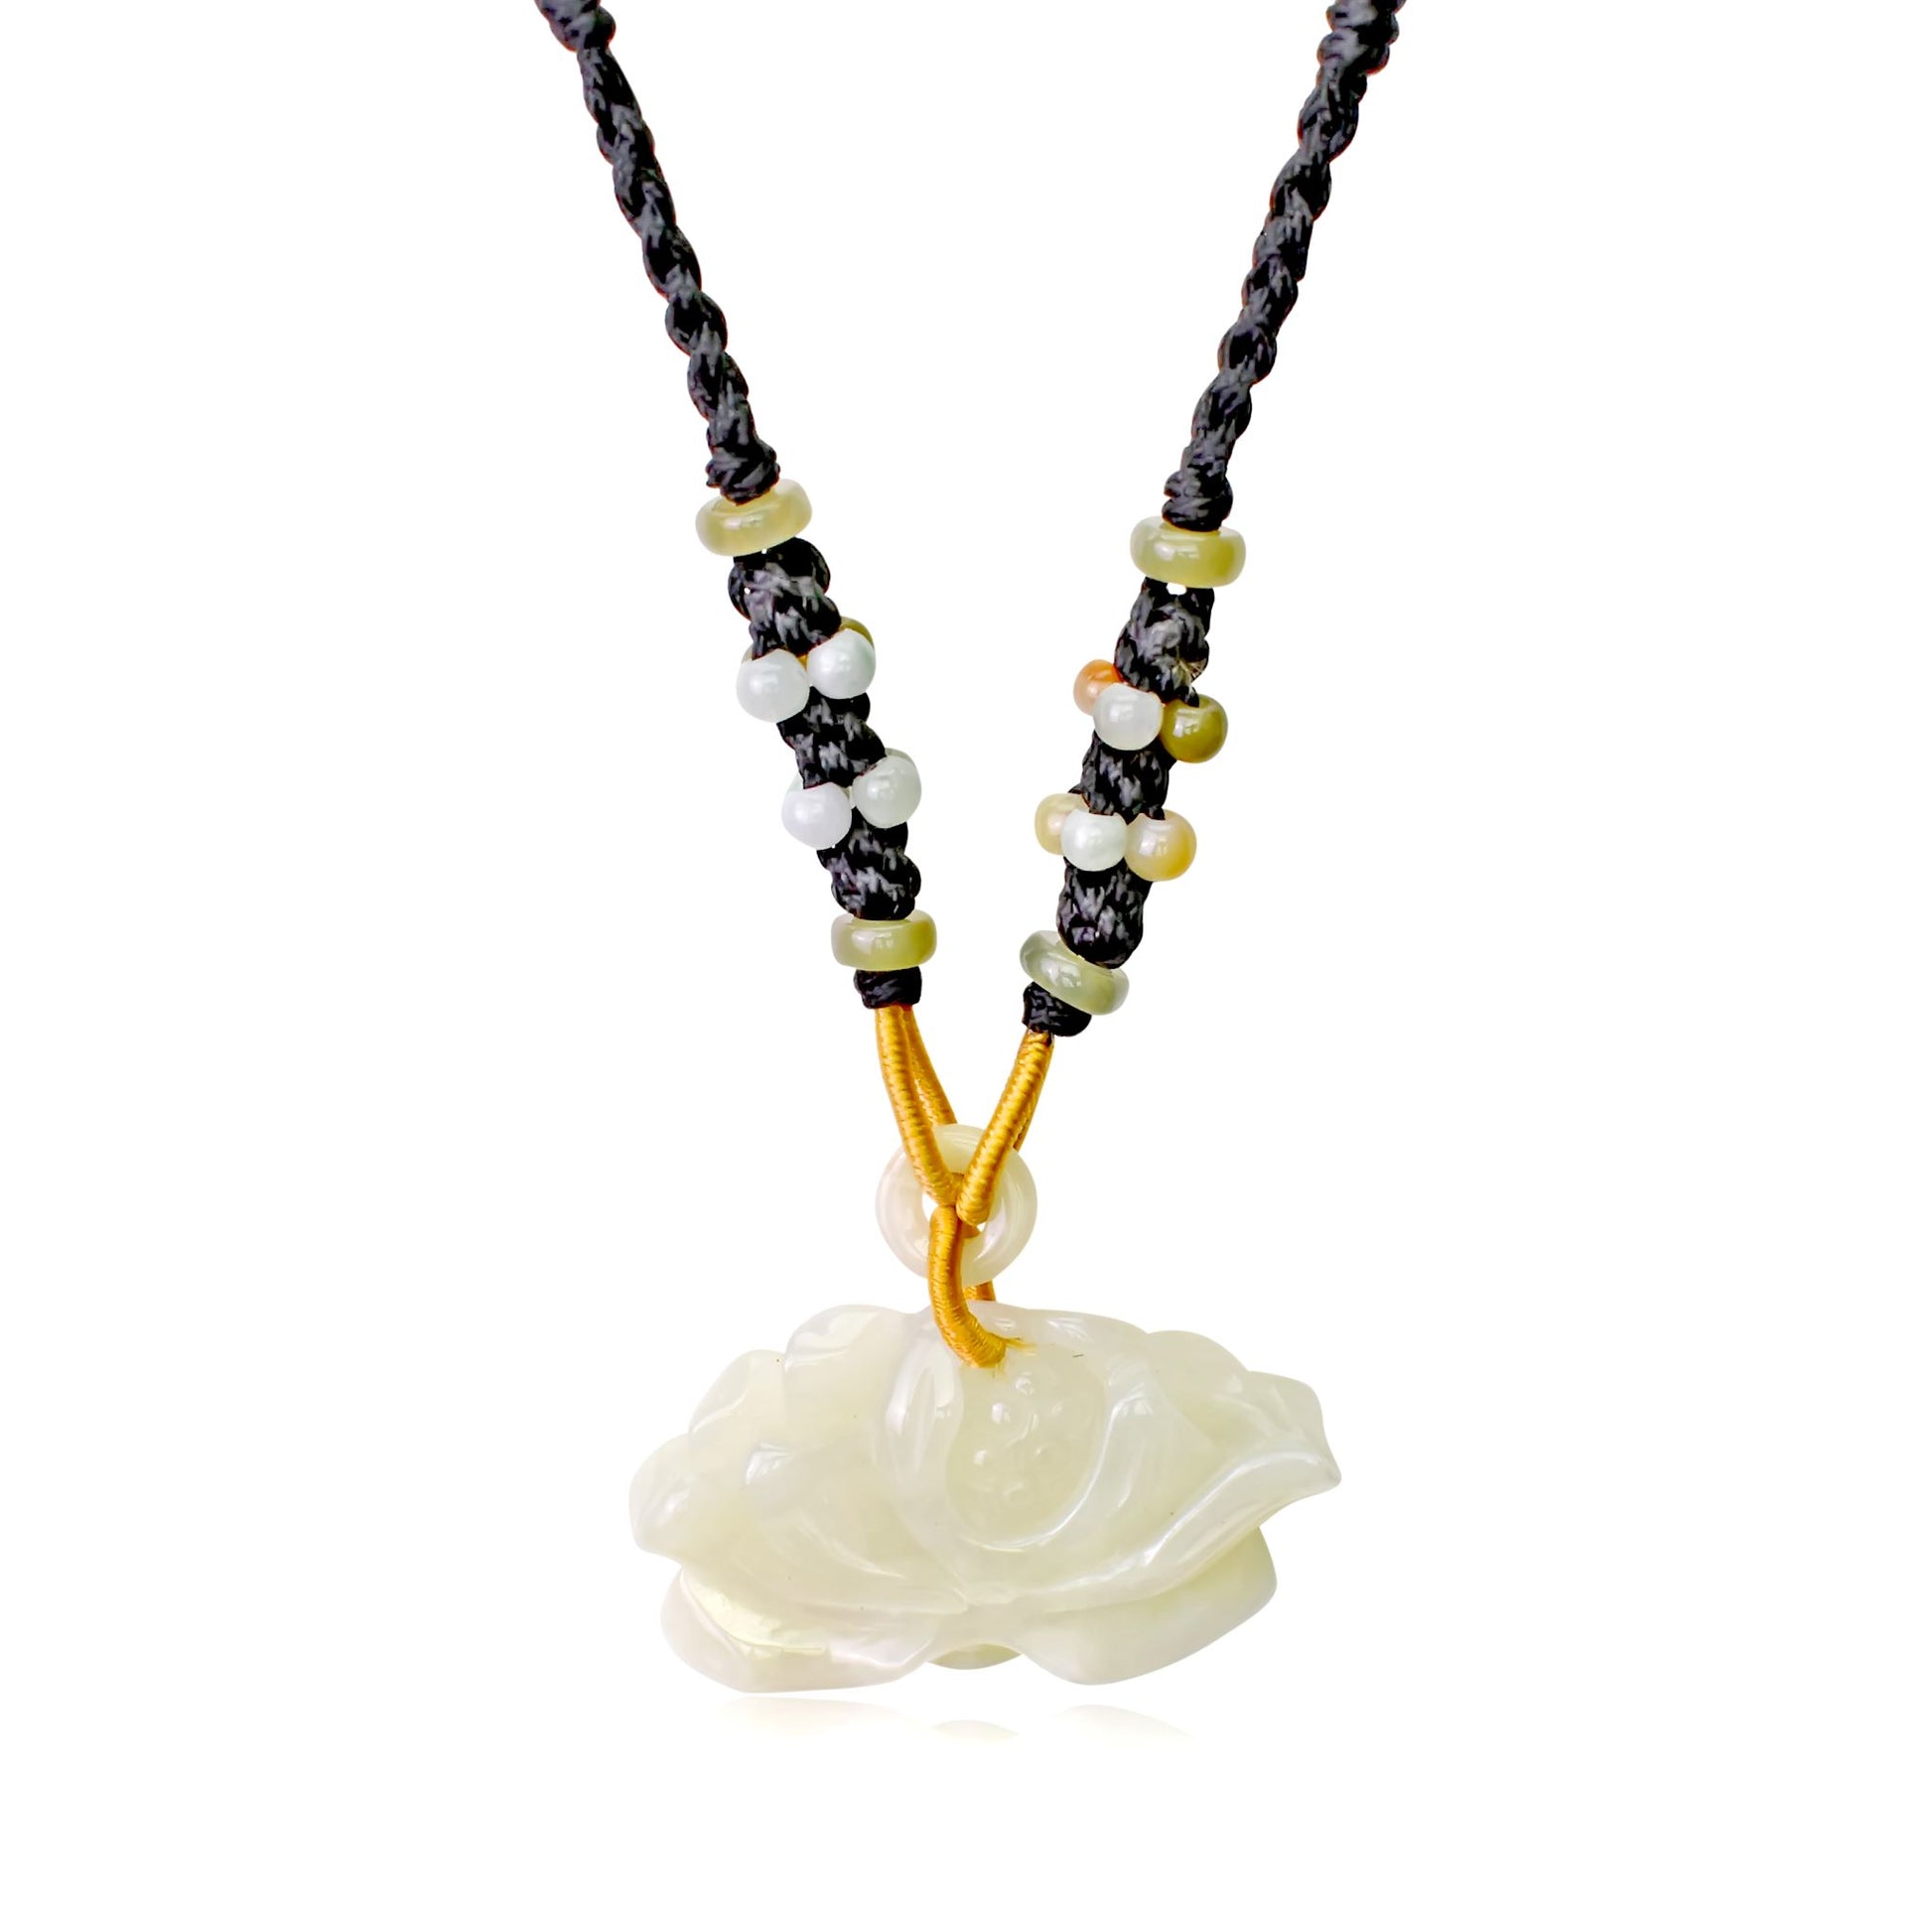 Beautiful Lotus Flower Handmade Jade Necklace Pendant with Black Cord